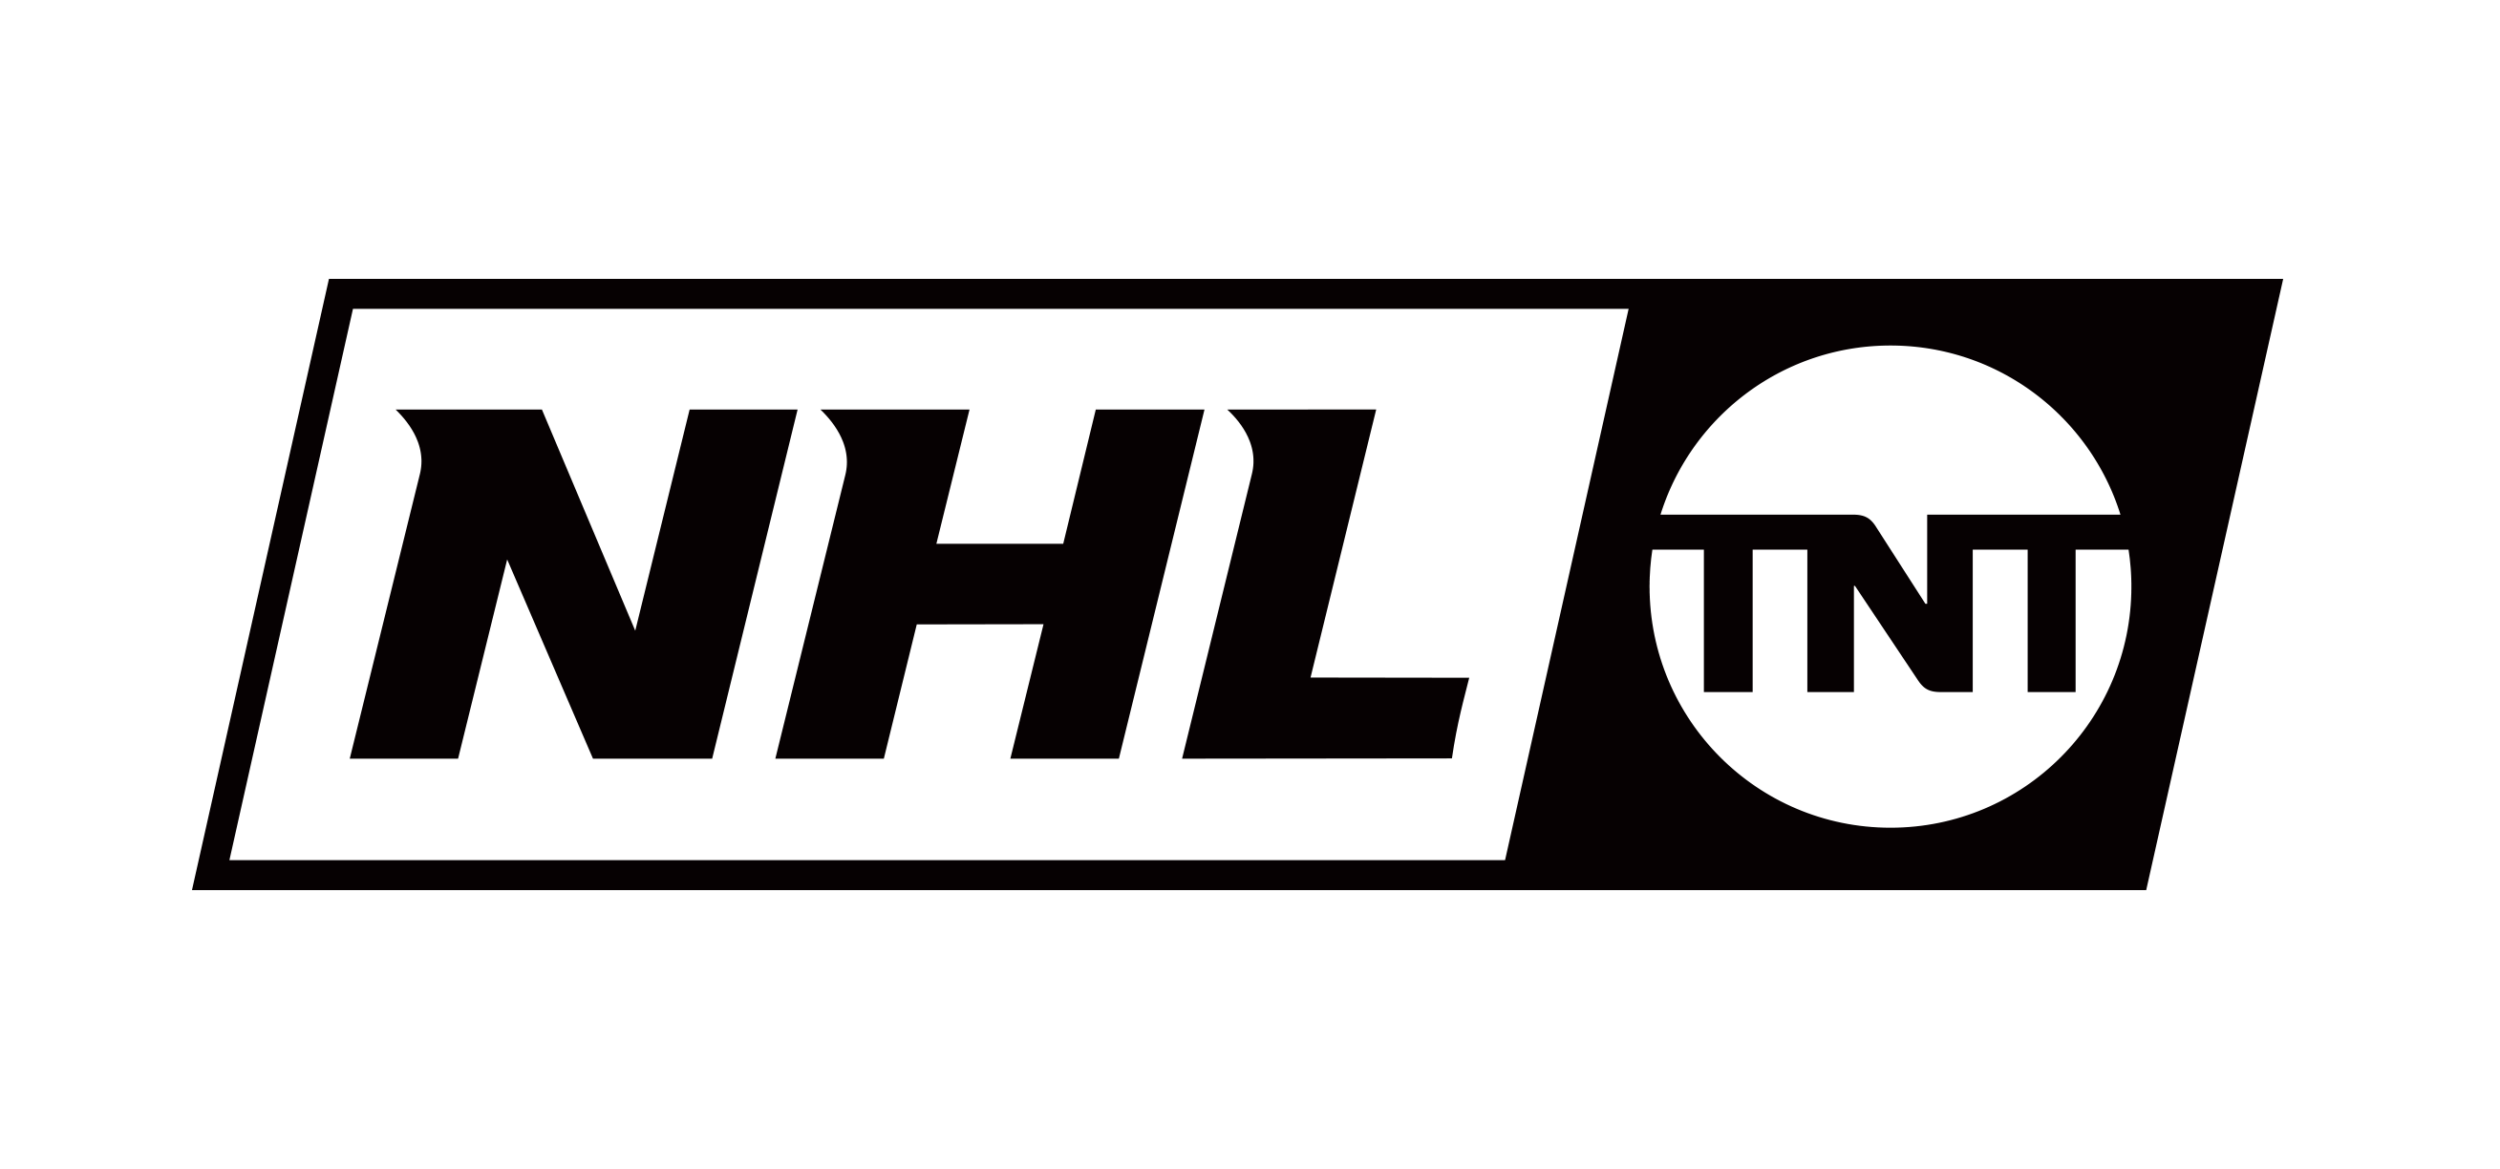 NHL Announces 2023-24 Regular-Season Schedule